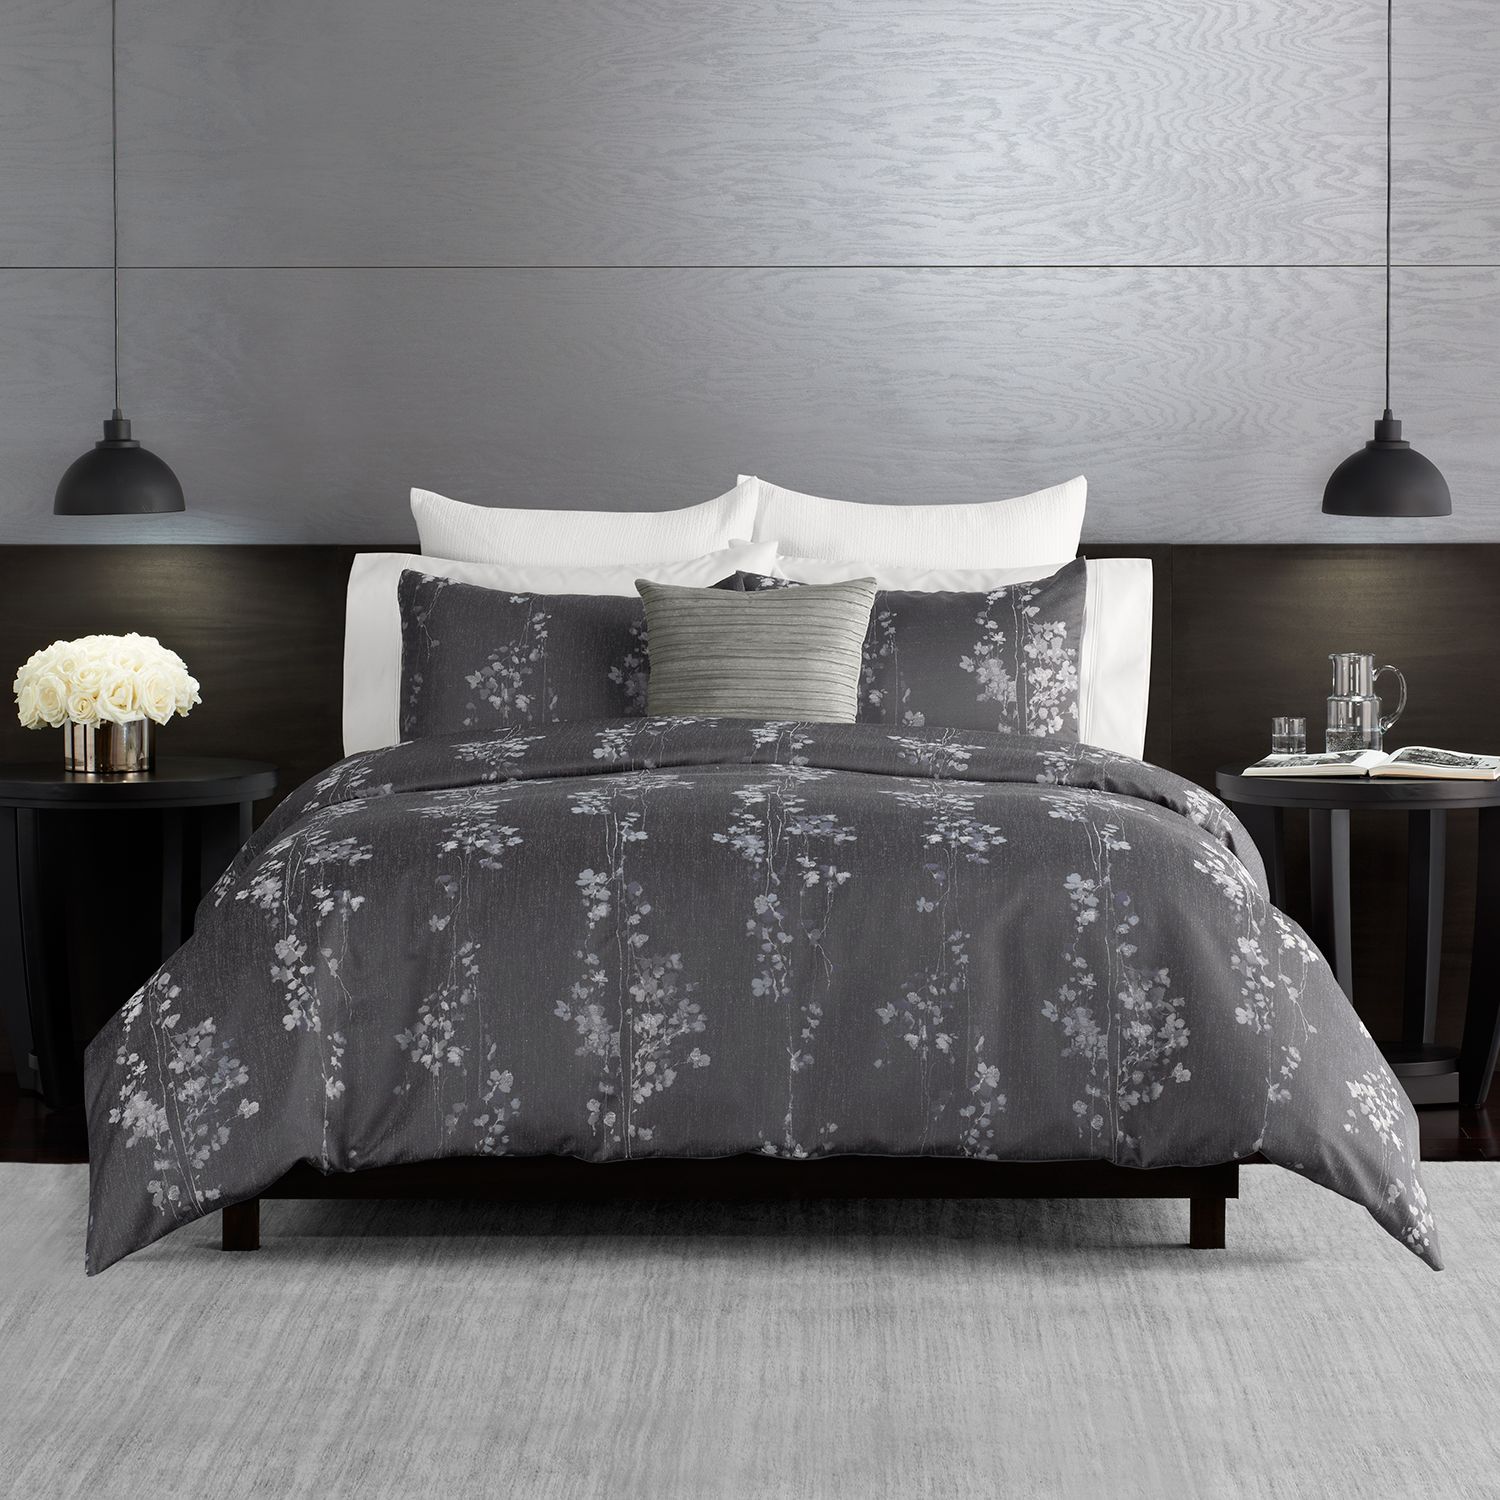 Dark Linear Floral Comforter Set with Shams